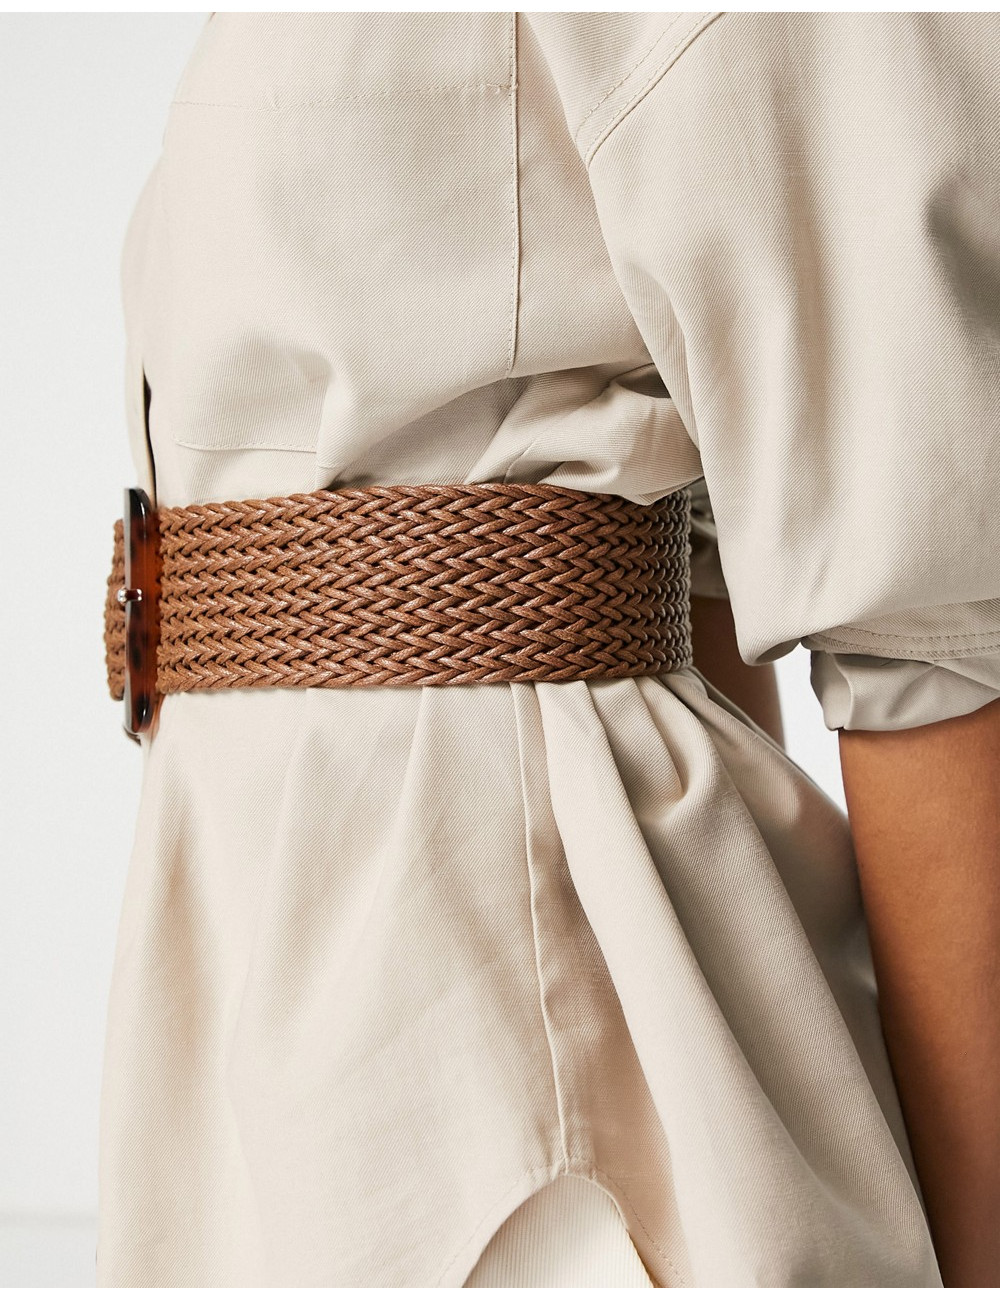 SVNX woven straw belt in brown